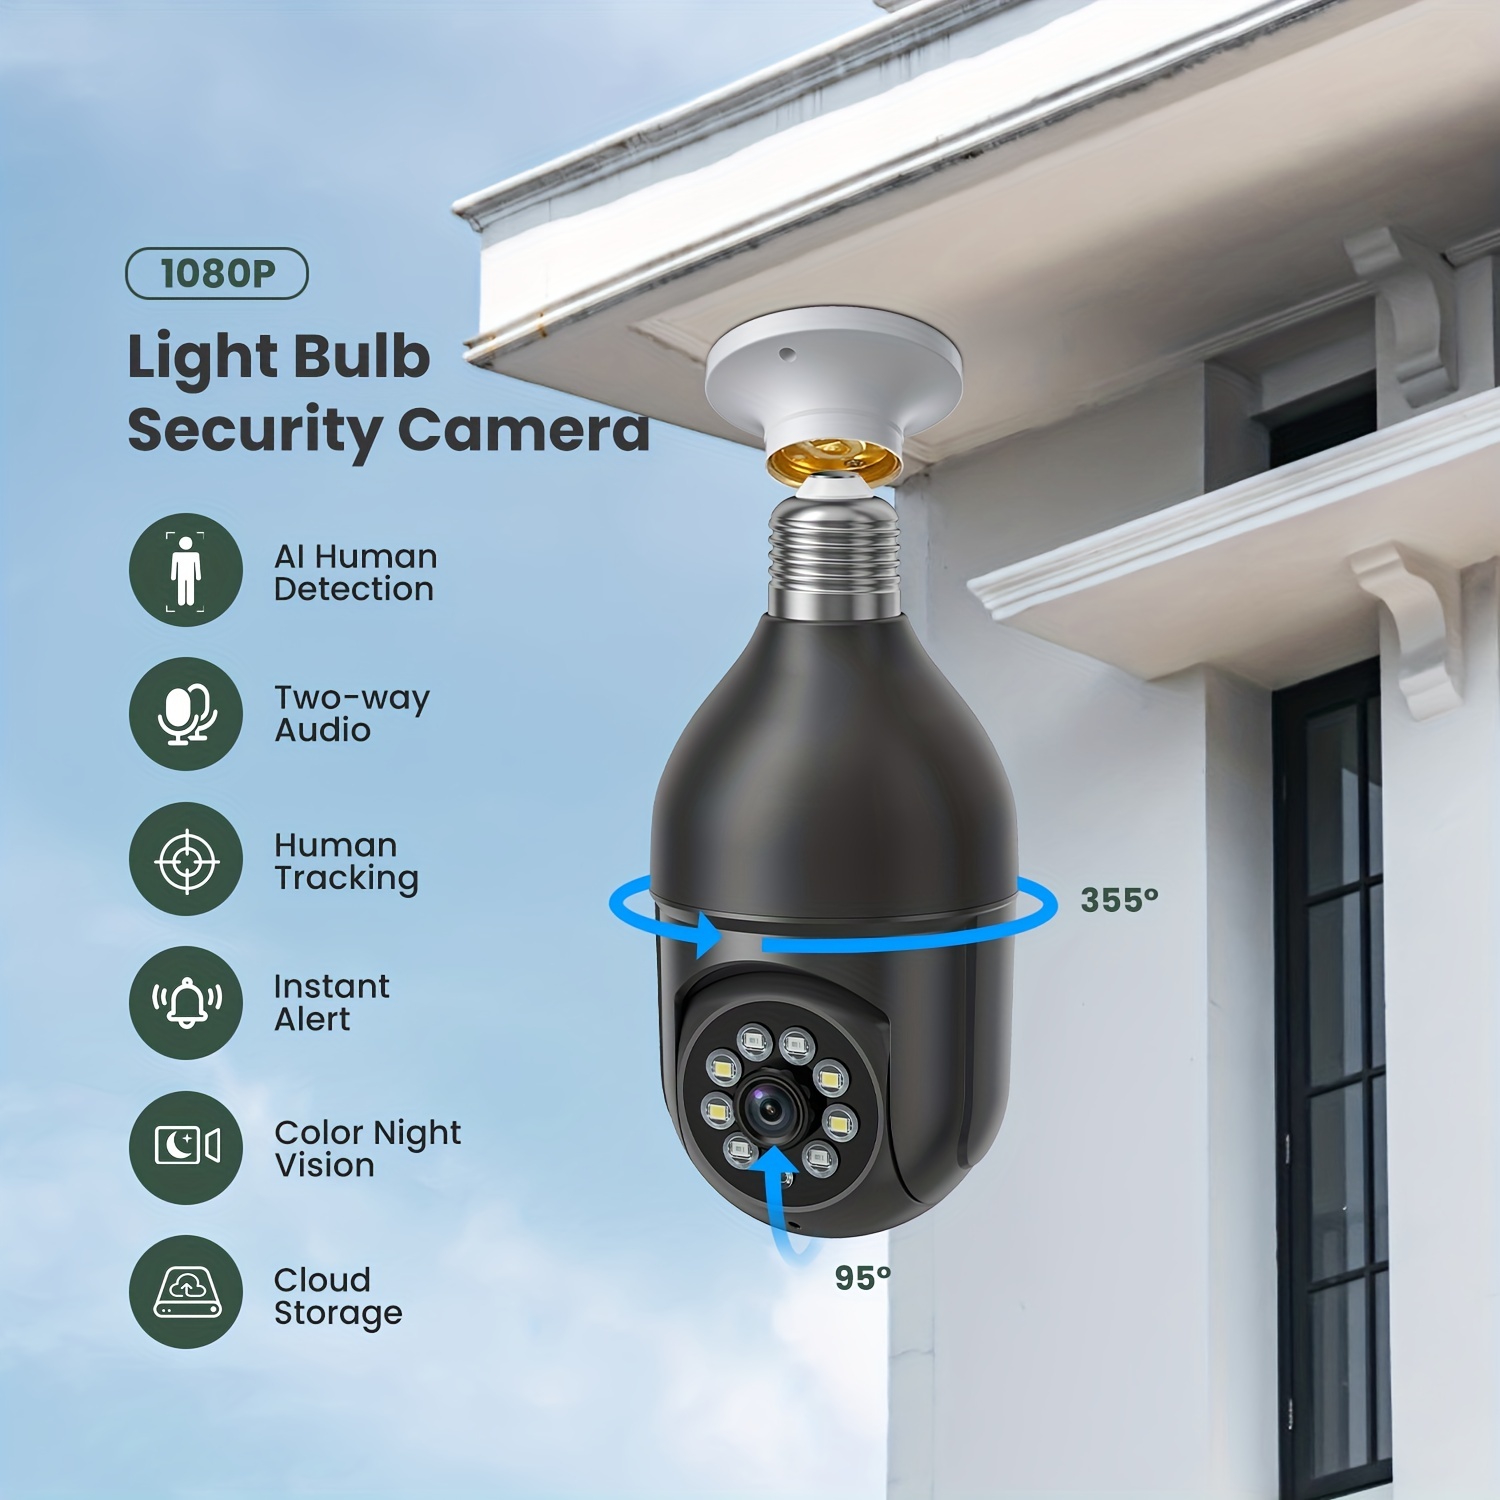 1080p Light Bulb Wireless Security Camera 355° Panoramic - Temu